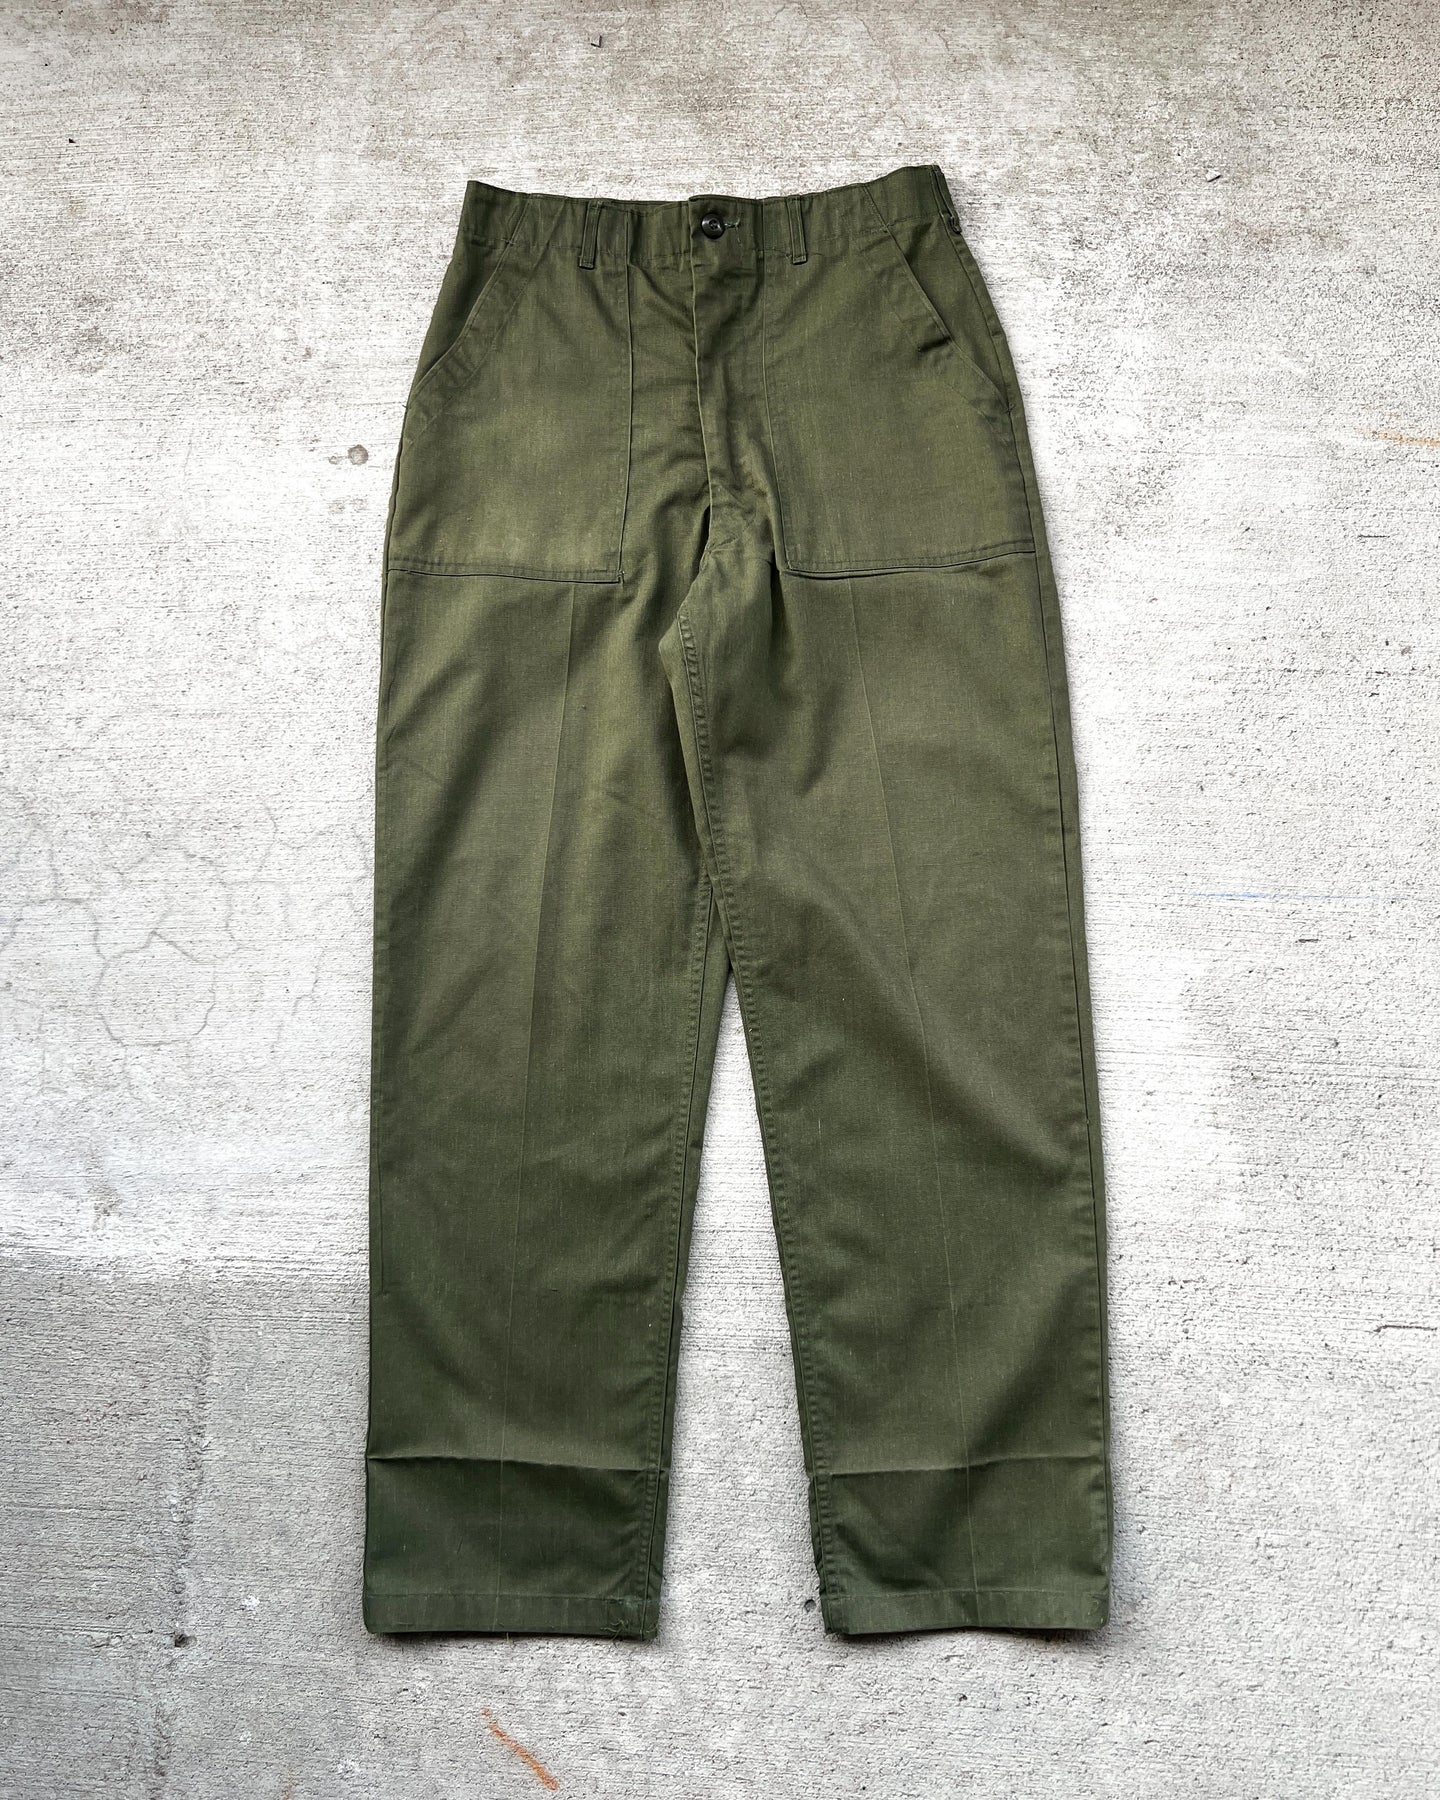 1970s OG-107 Fatigue Pants - Size 32 x 32